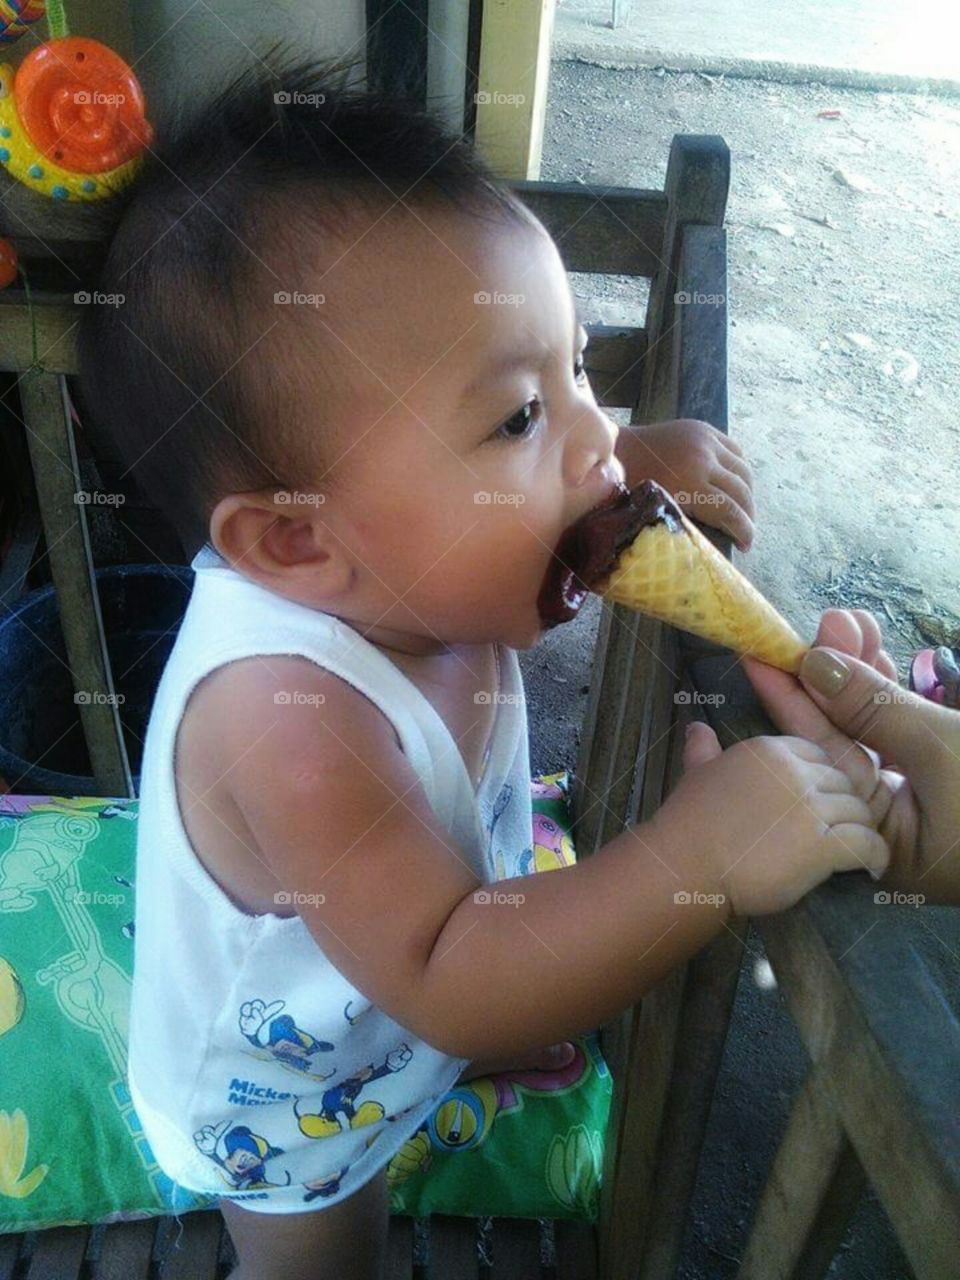 Eating ice cream 👶